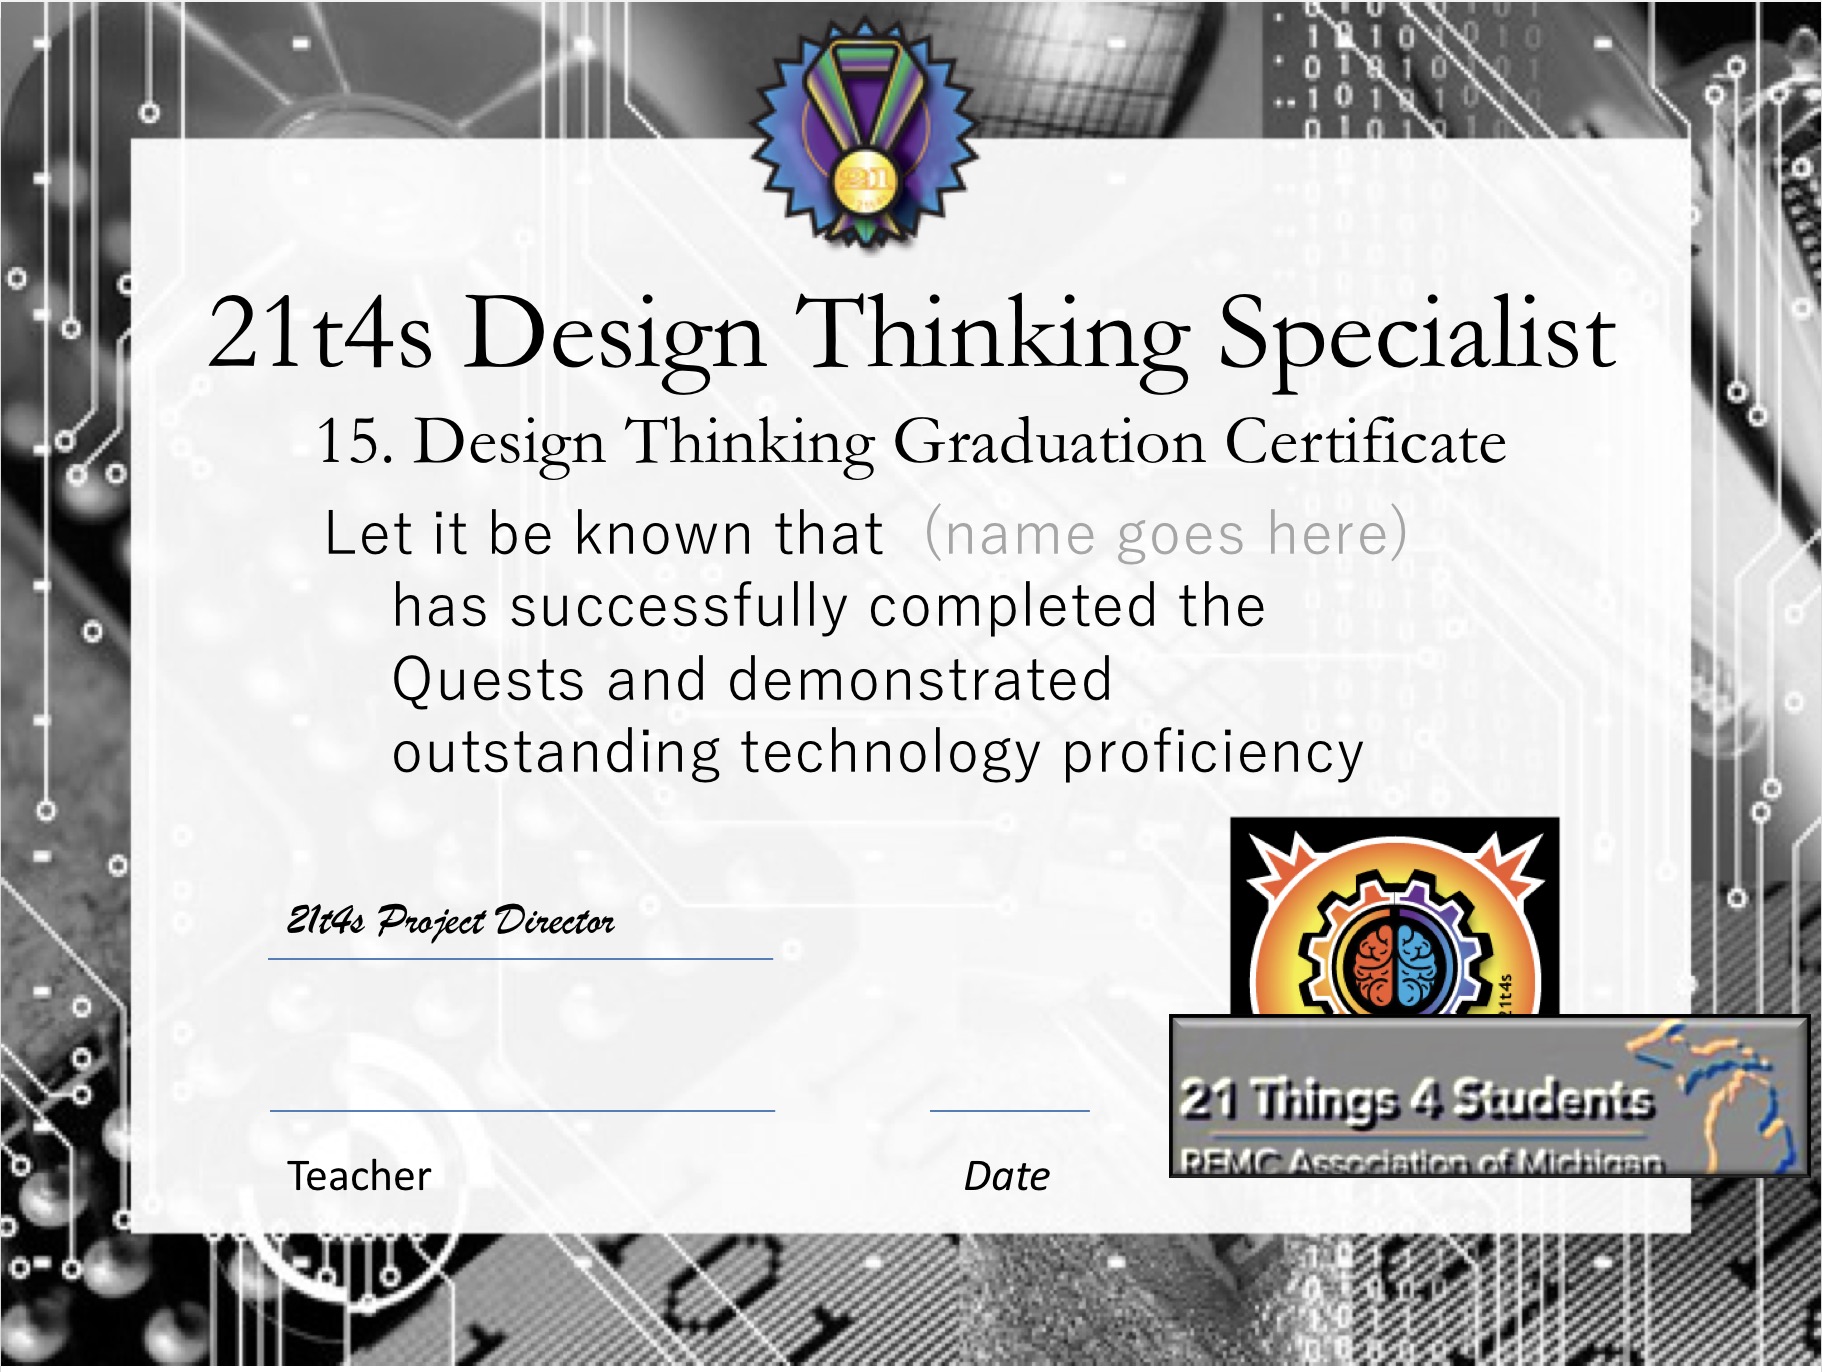 Design Thinking Specialist Graduation Certificate image